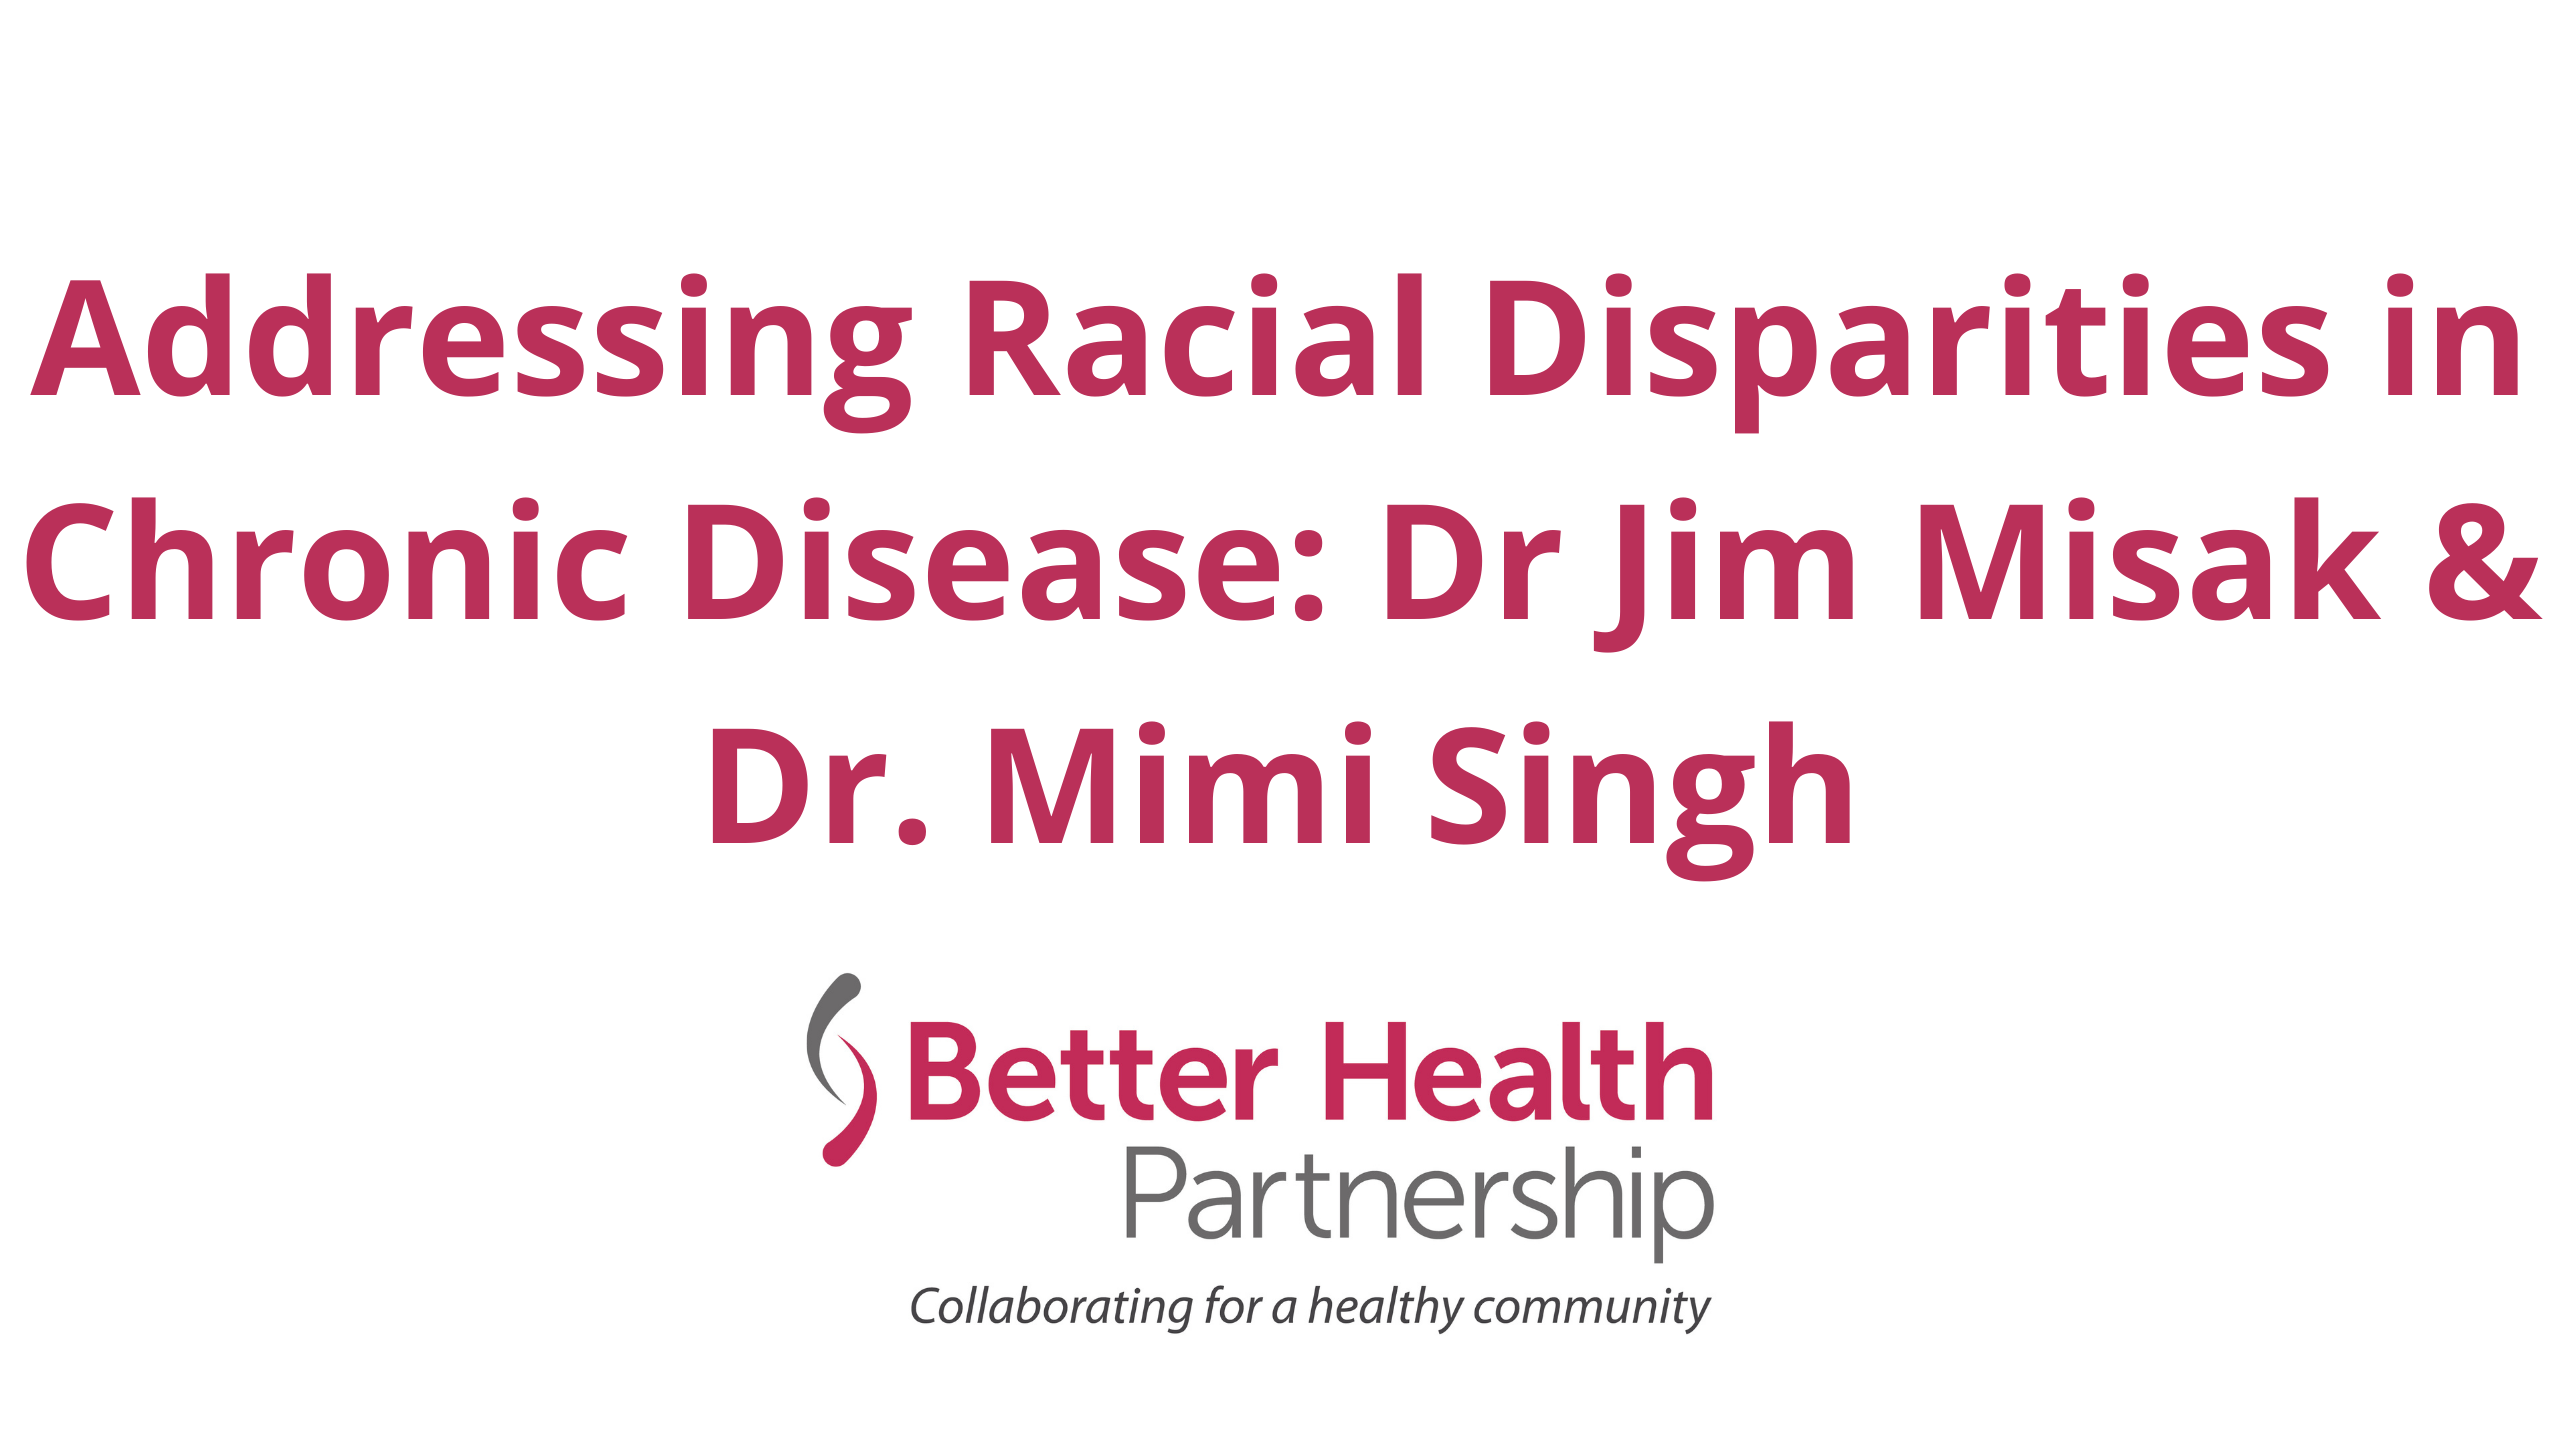 Addressing Racial Disparities in Chronic Disease: Dr Jim Misak & Dr. Mimi Singh